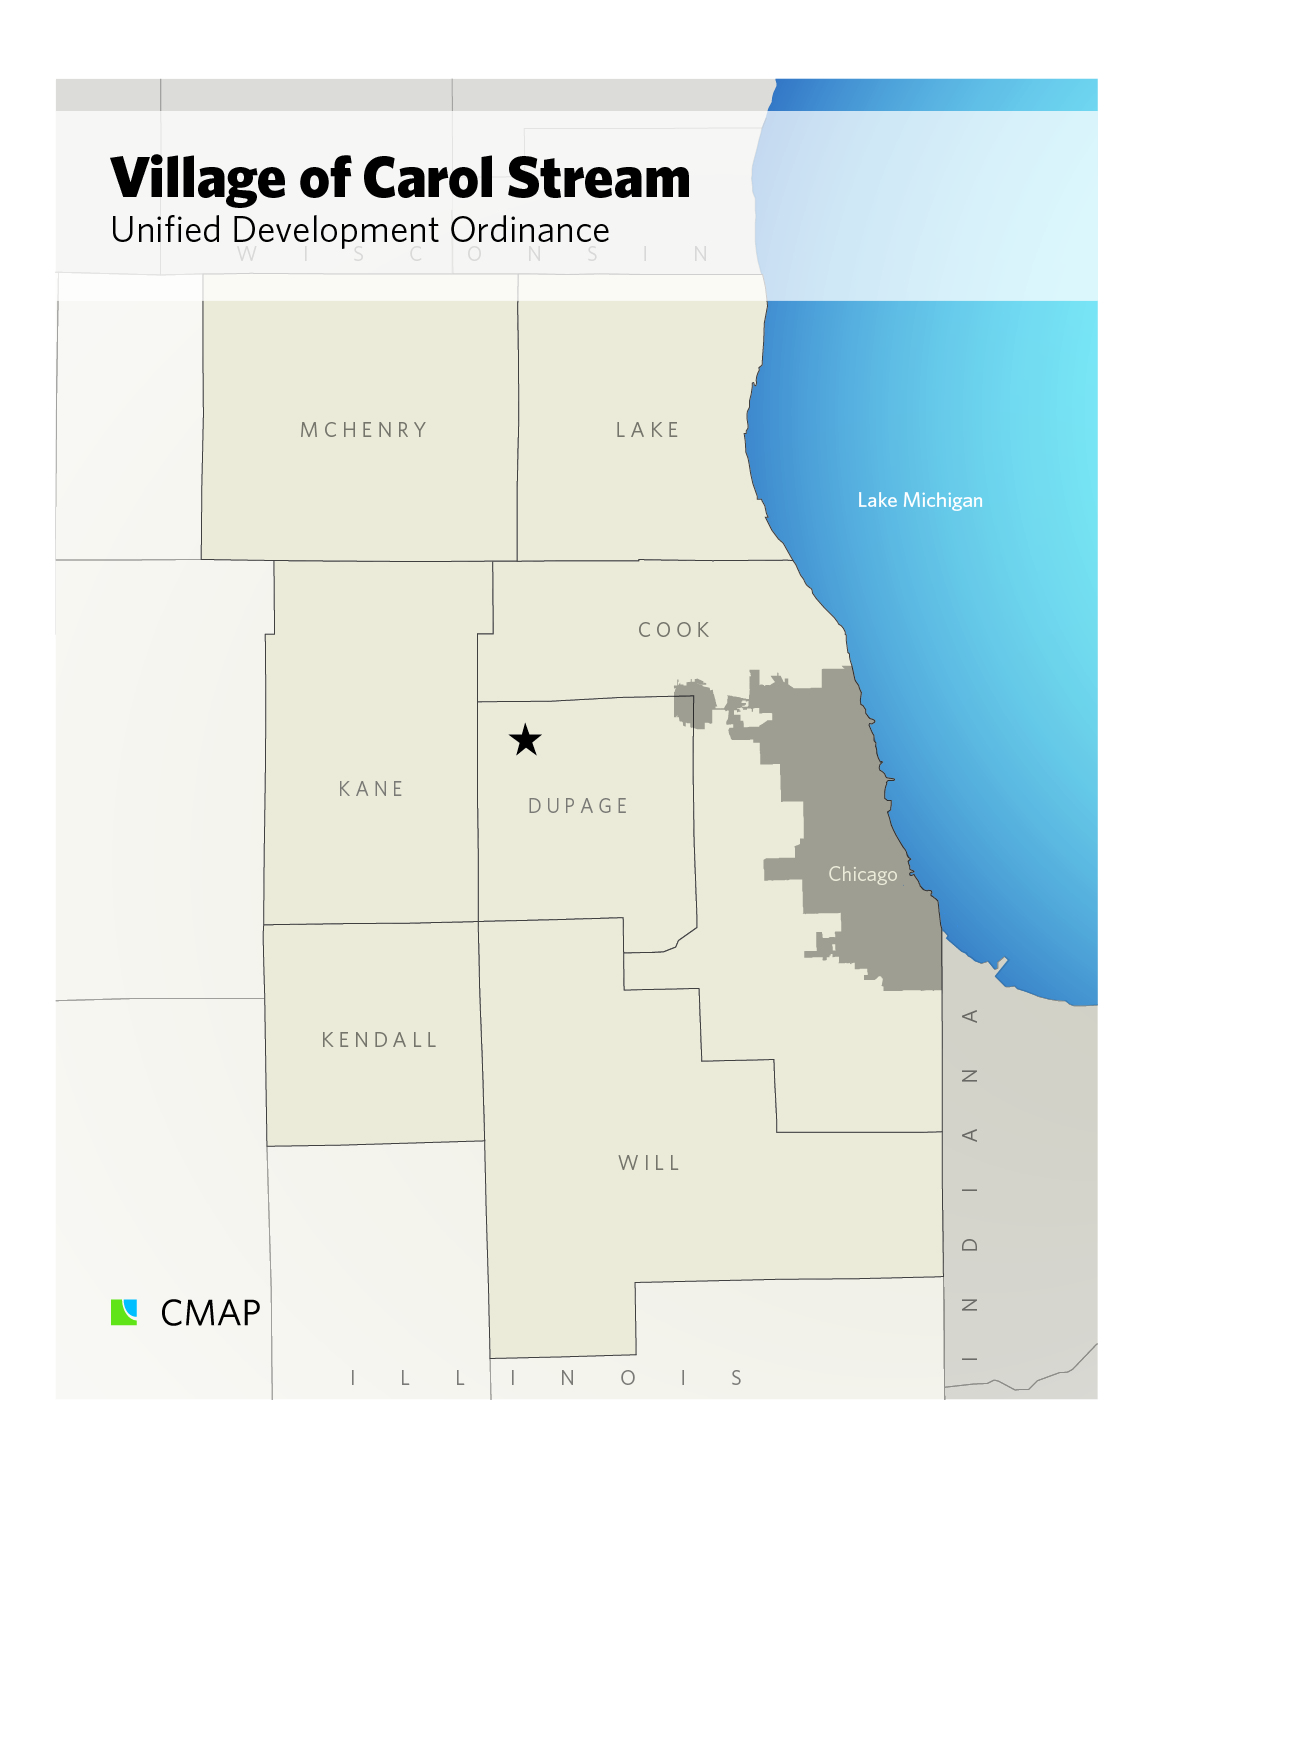 Map locating Carol Stream within the Chicago region.